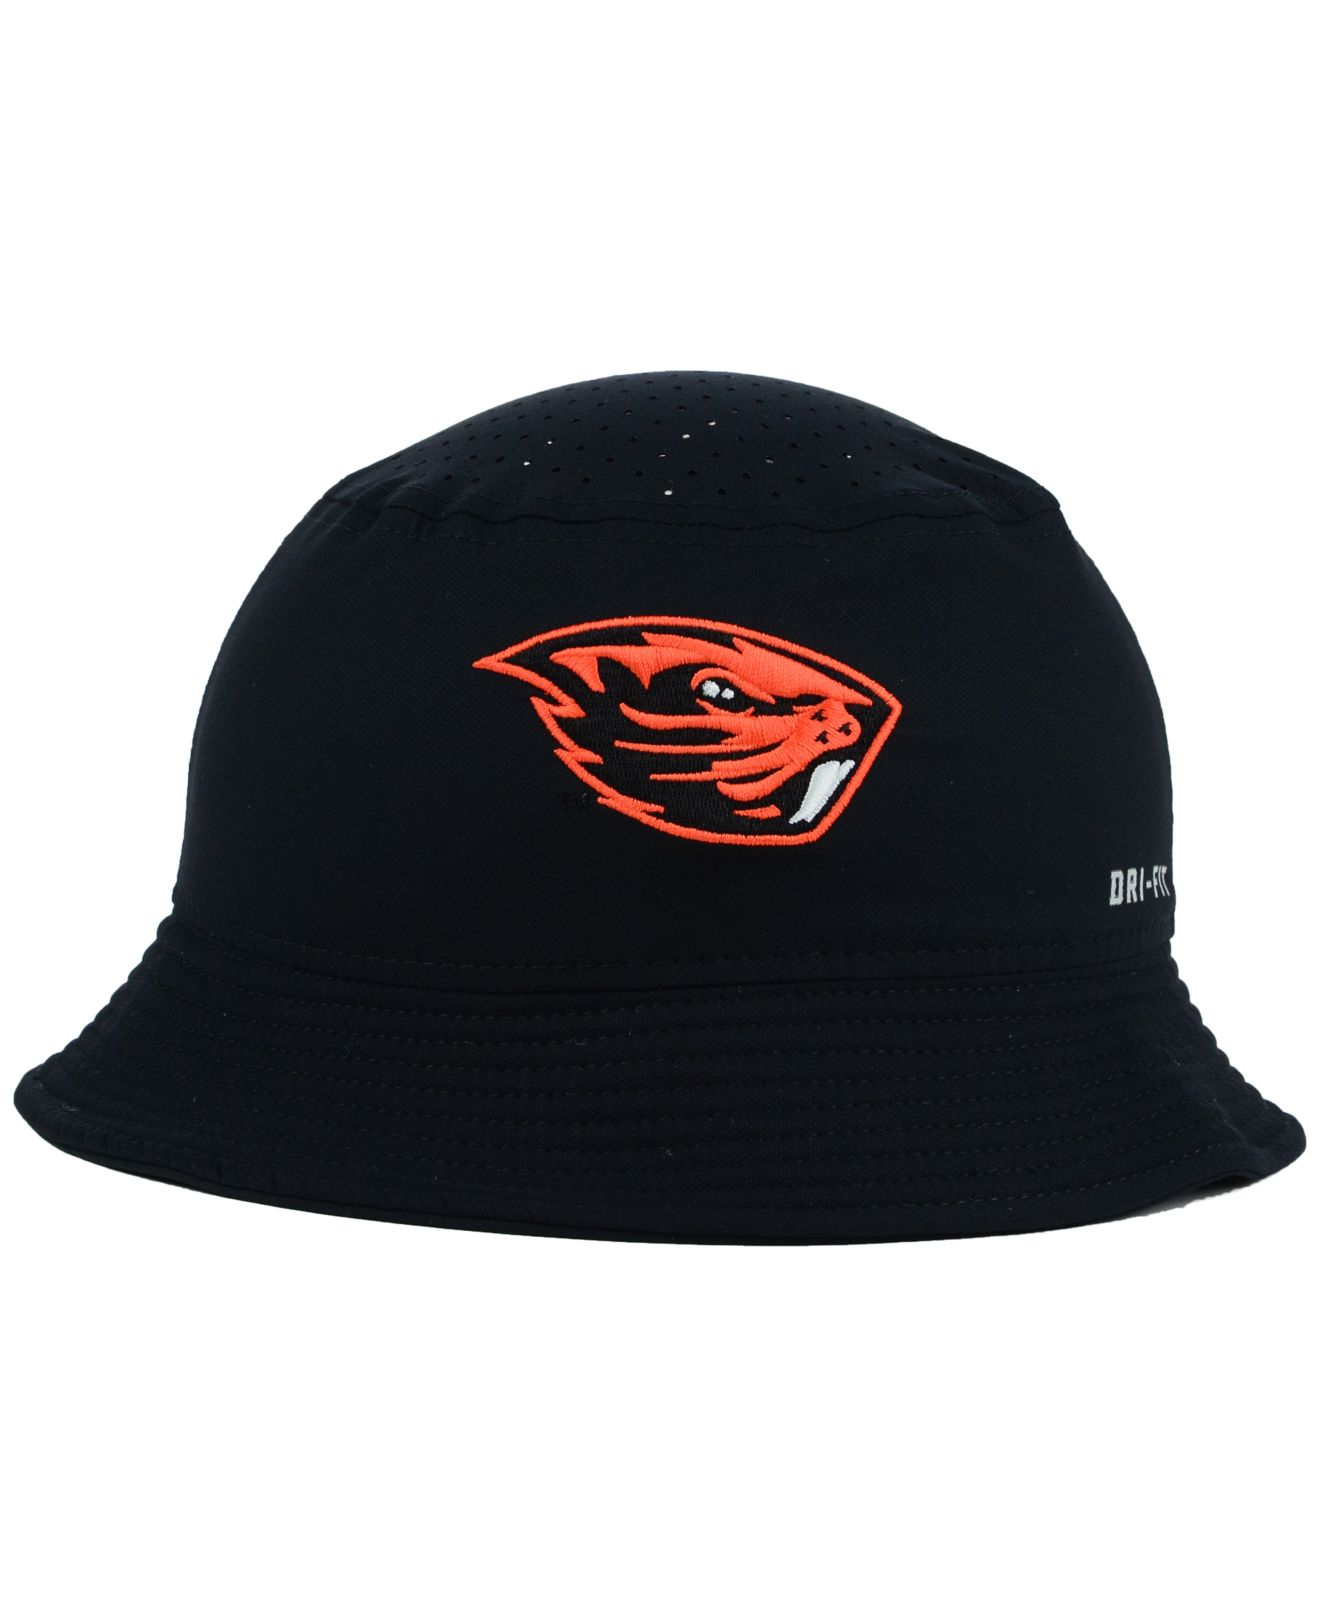 Nike Oregon State Beavers Vapor Bucket Hat in Black for Men - Lyst